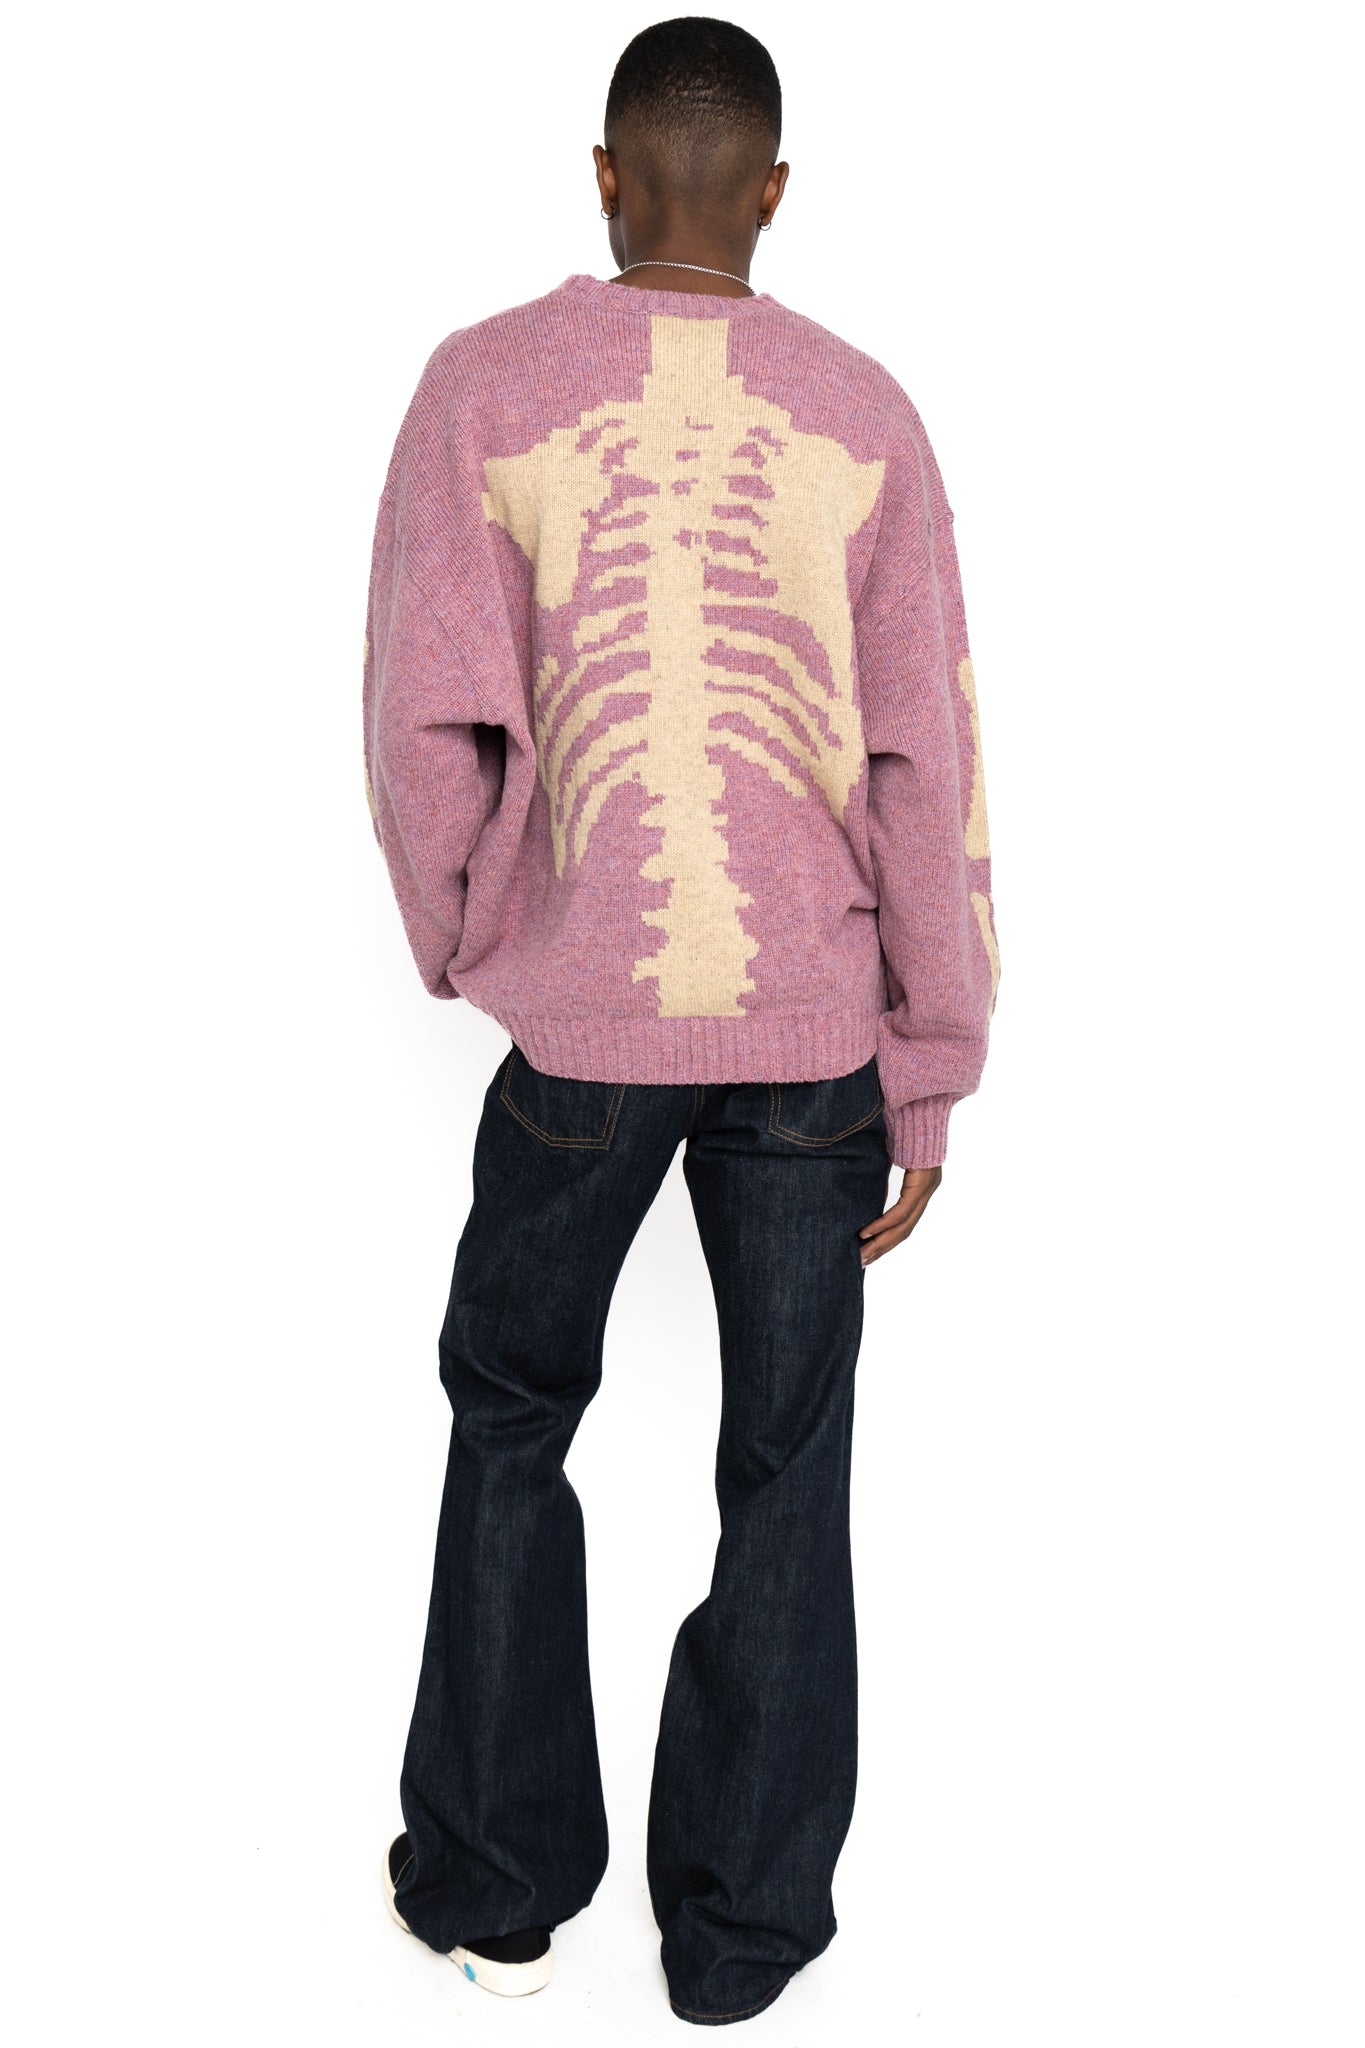 5G Wool BONE Crew Sweater - Light Purple